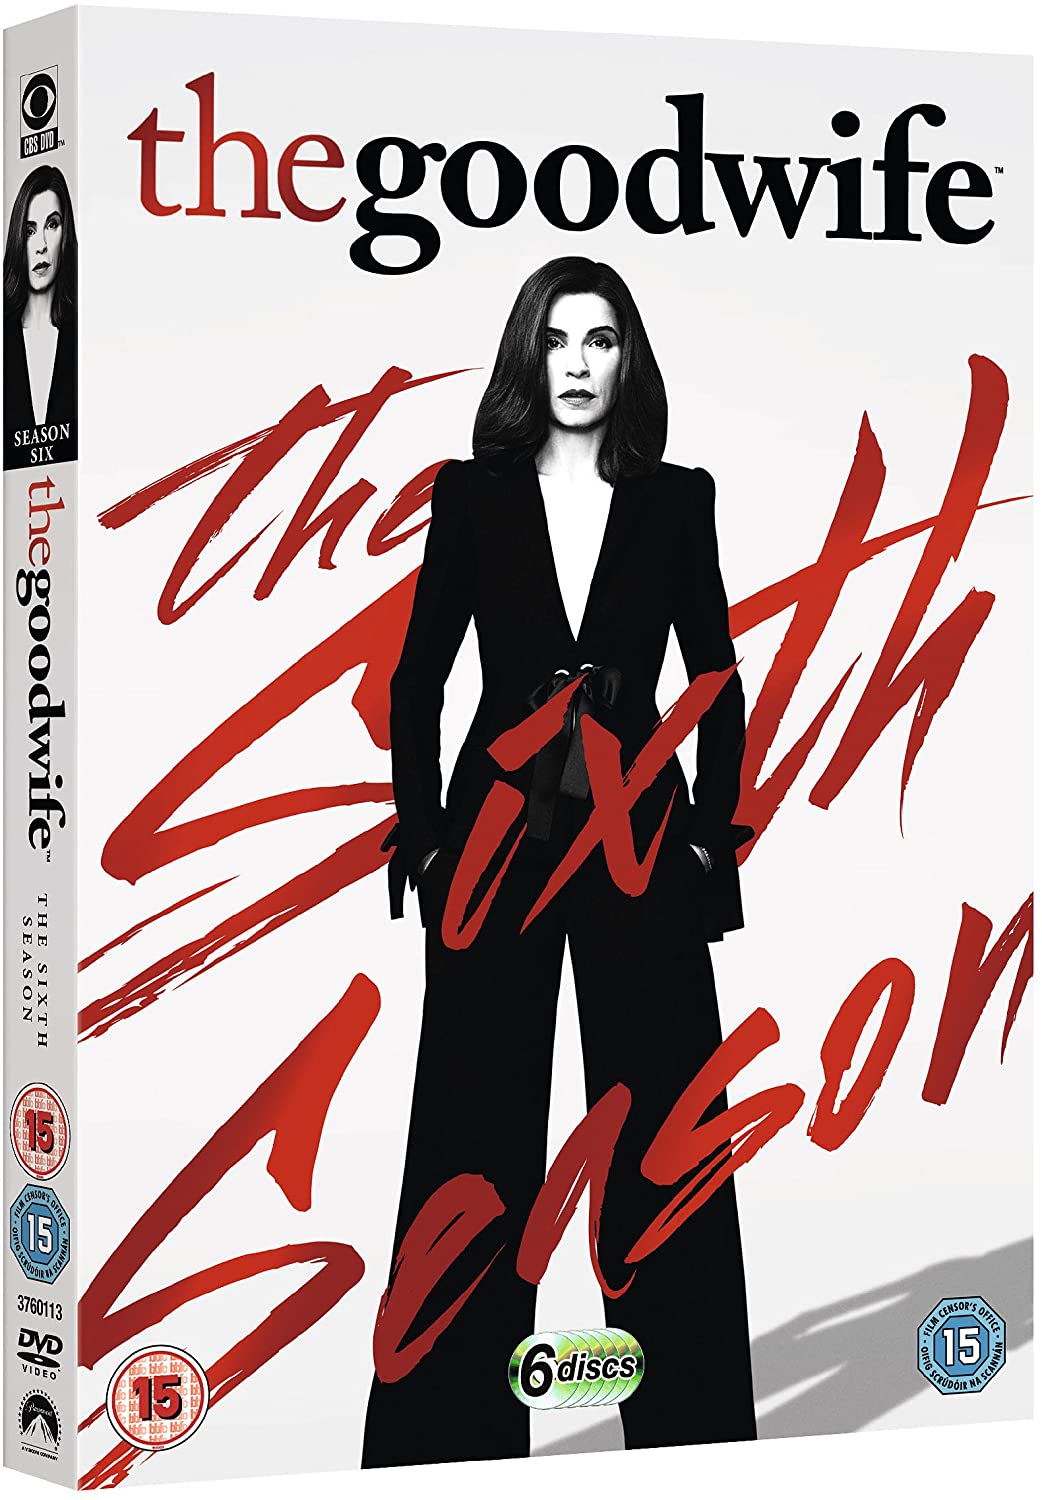 The Good Wife - Season 6 [DVD] [2014]